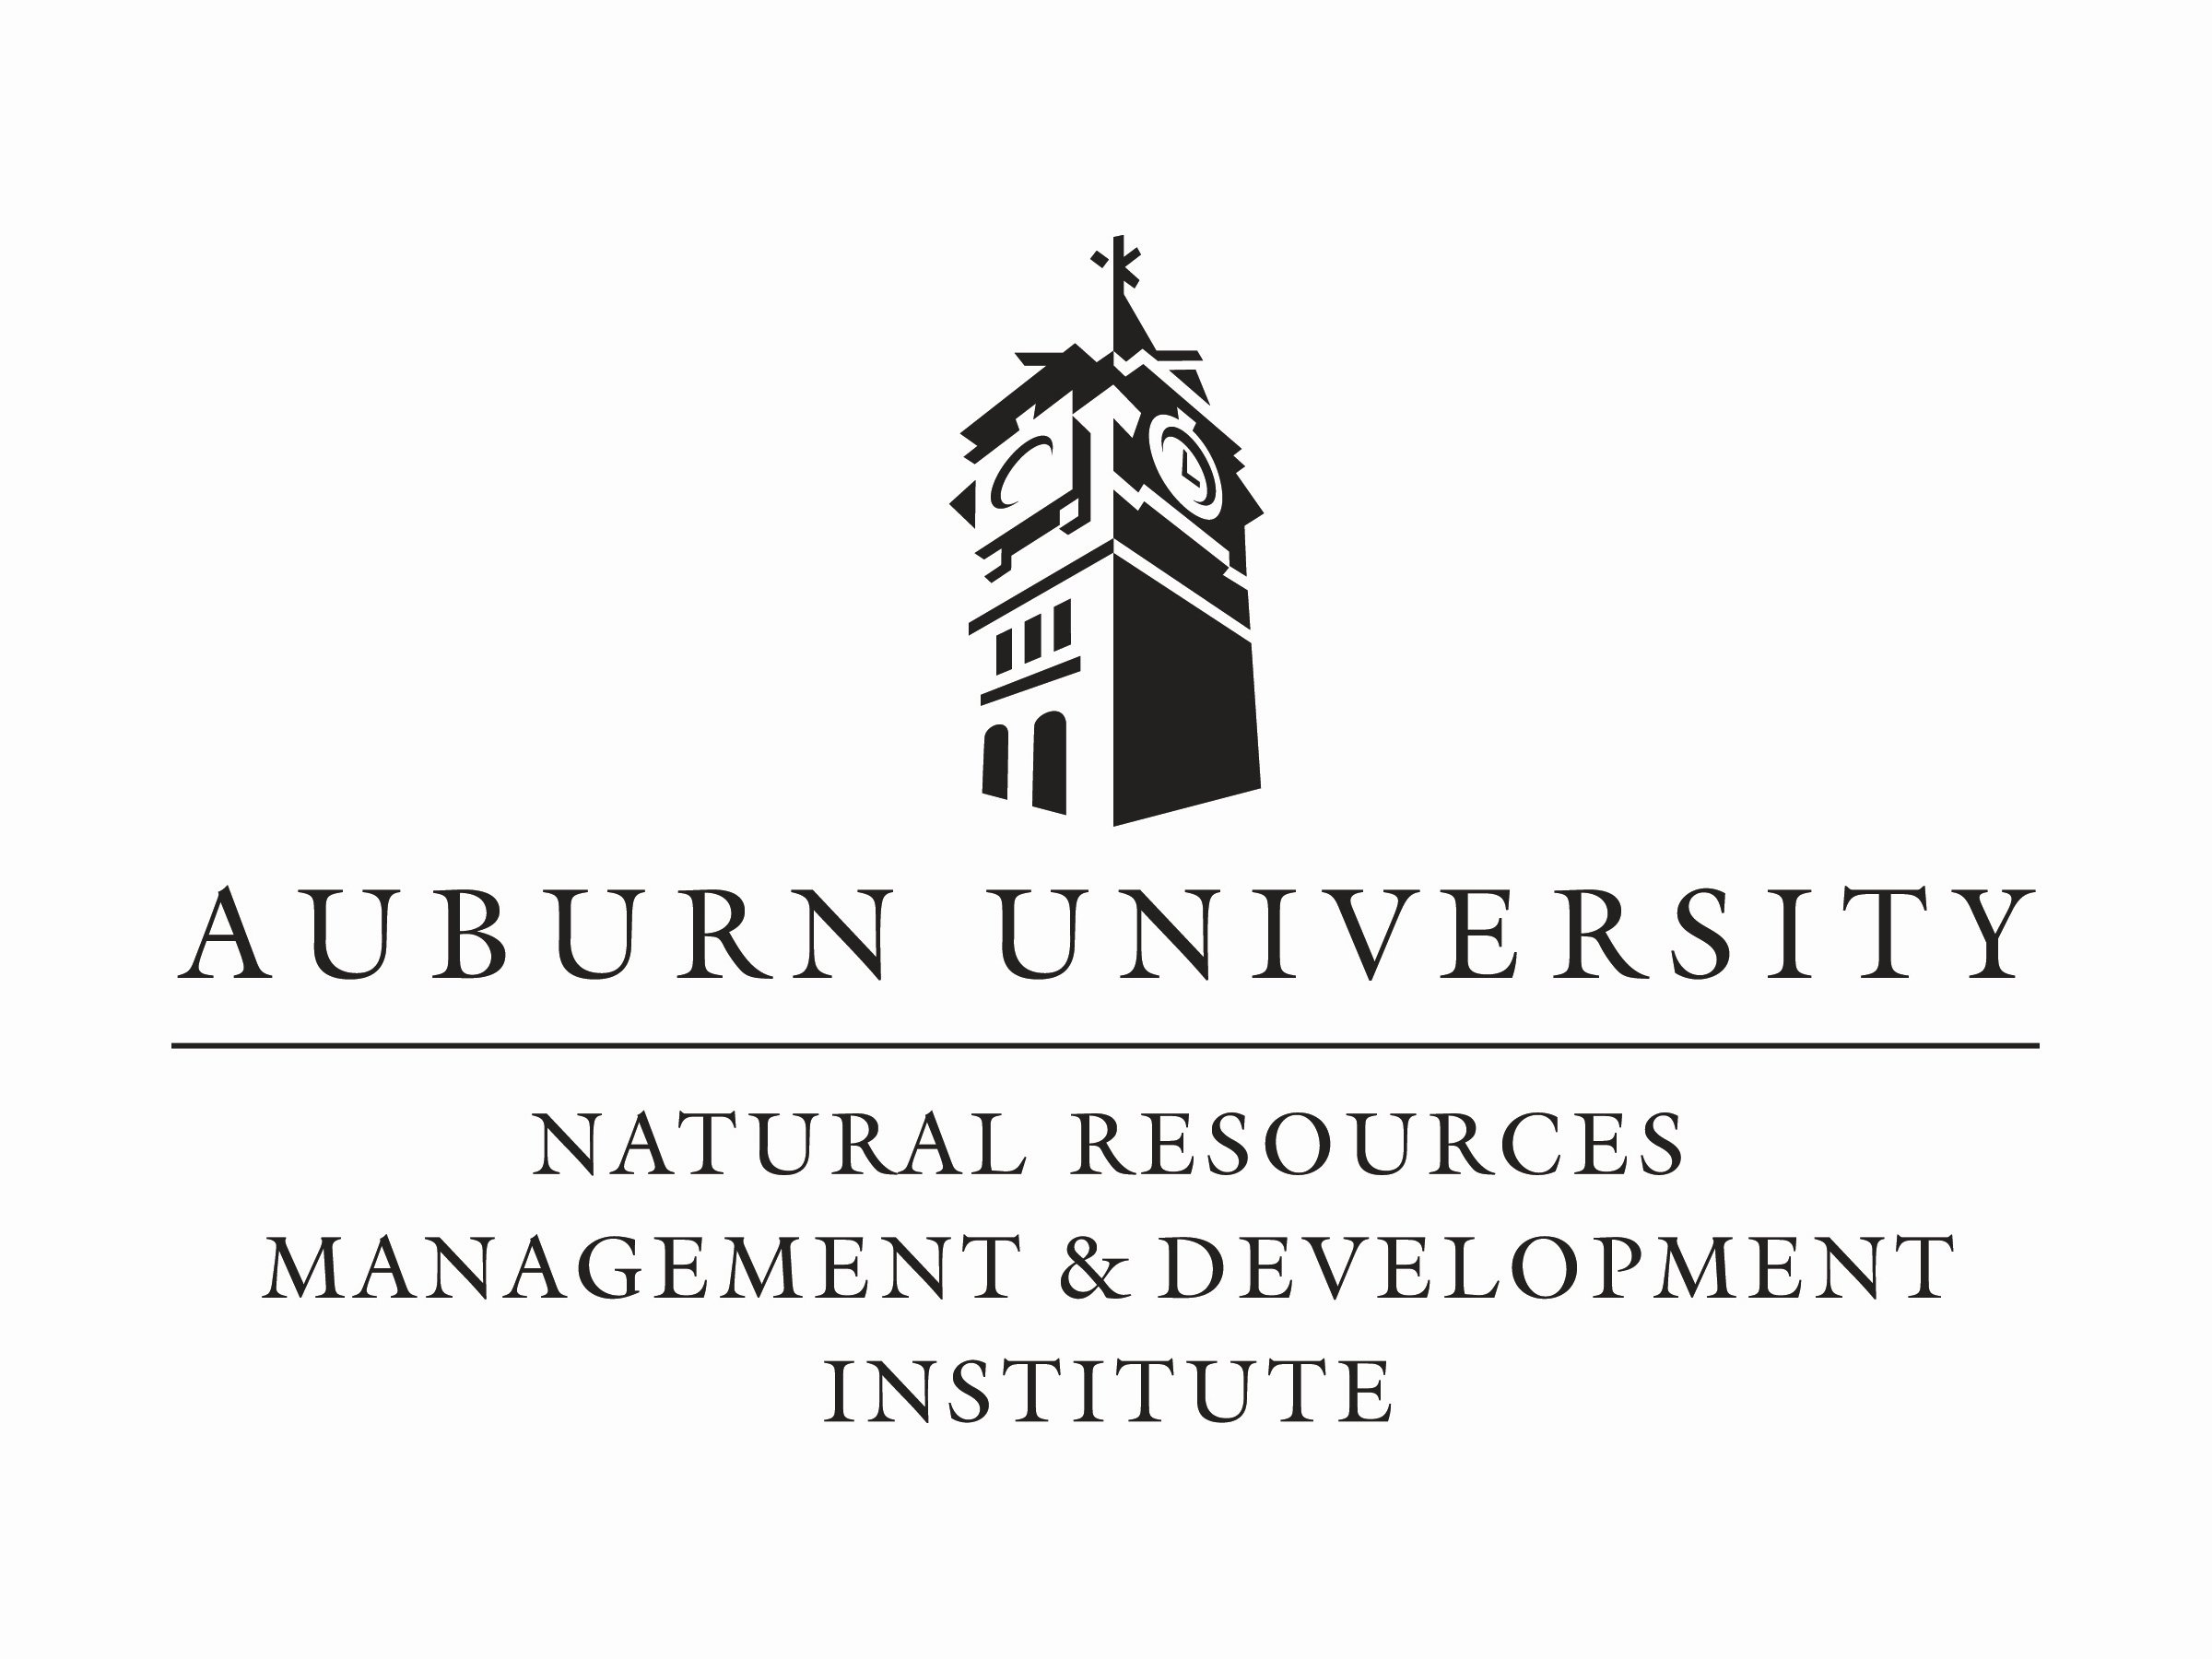  AUBURN UNIVERSITY NATURAL RESOURCES MANAGEMENT &amp; DEVELOPMENT INSTITUTE